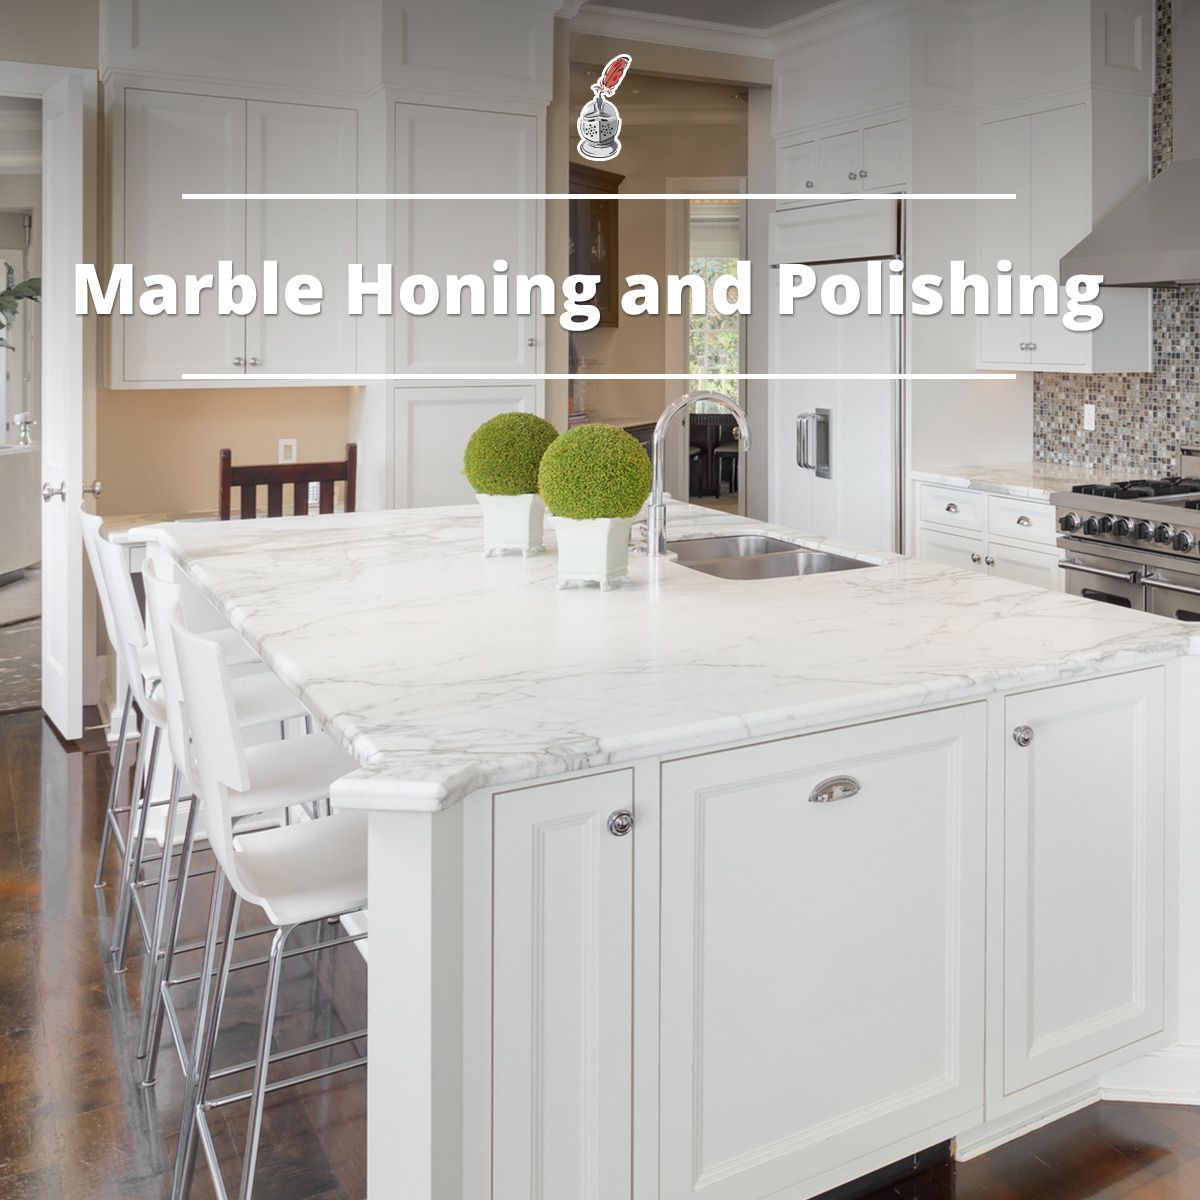 Marble Honing and Polishing